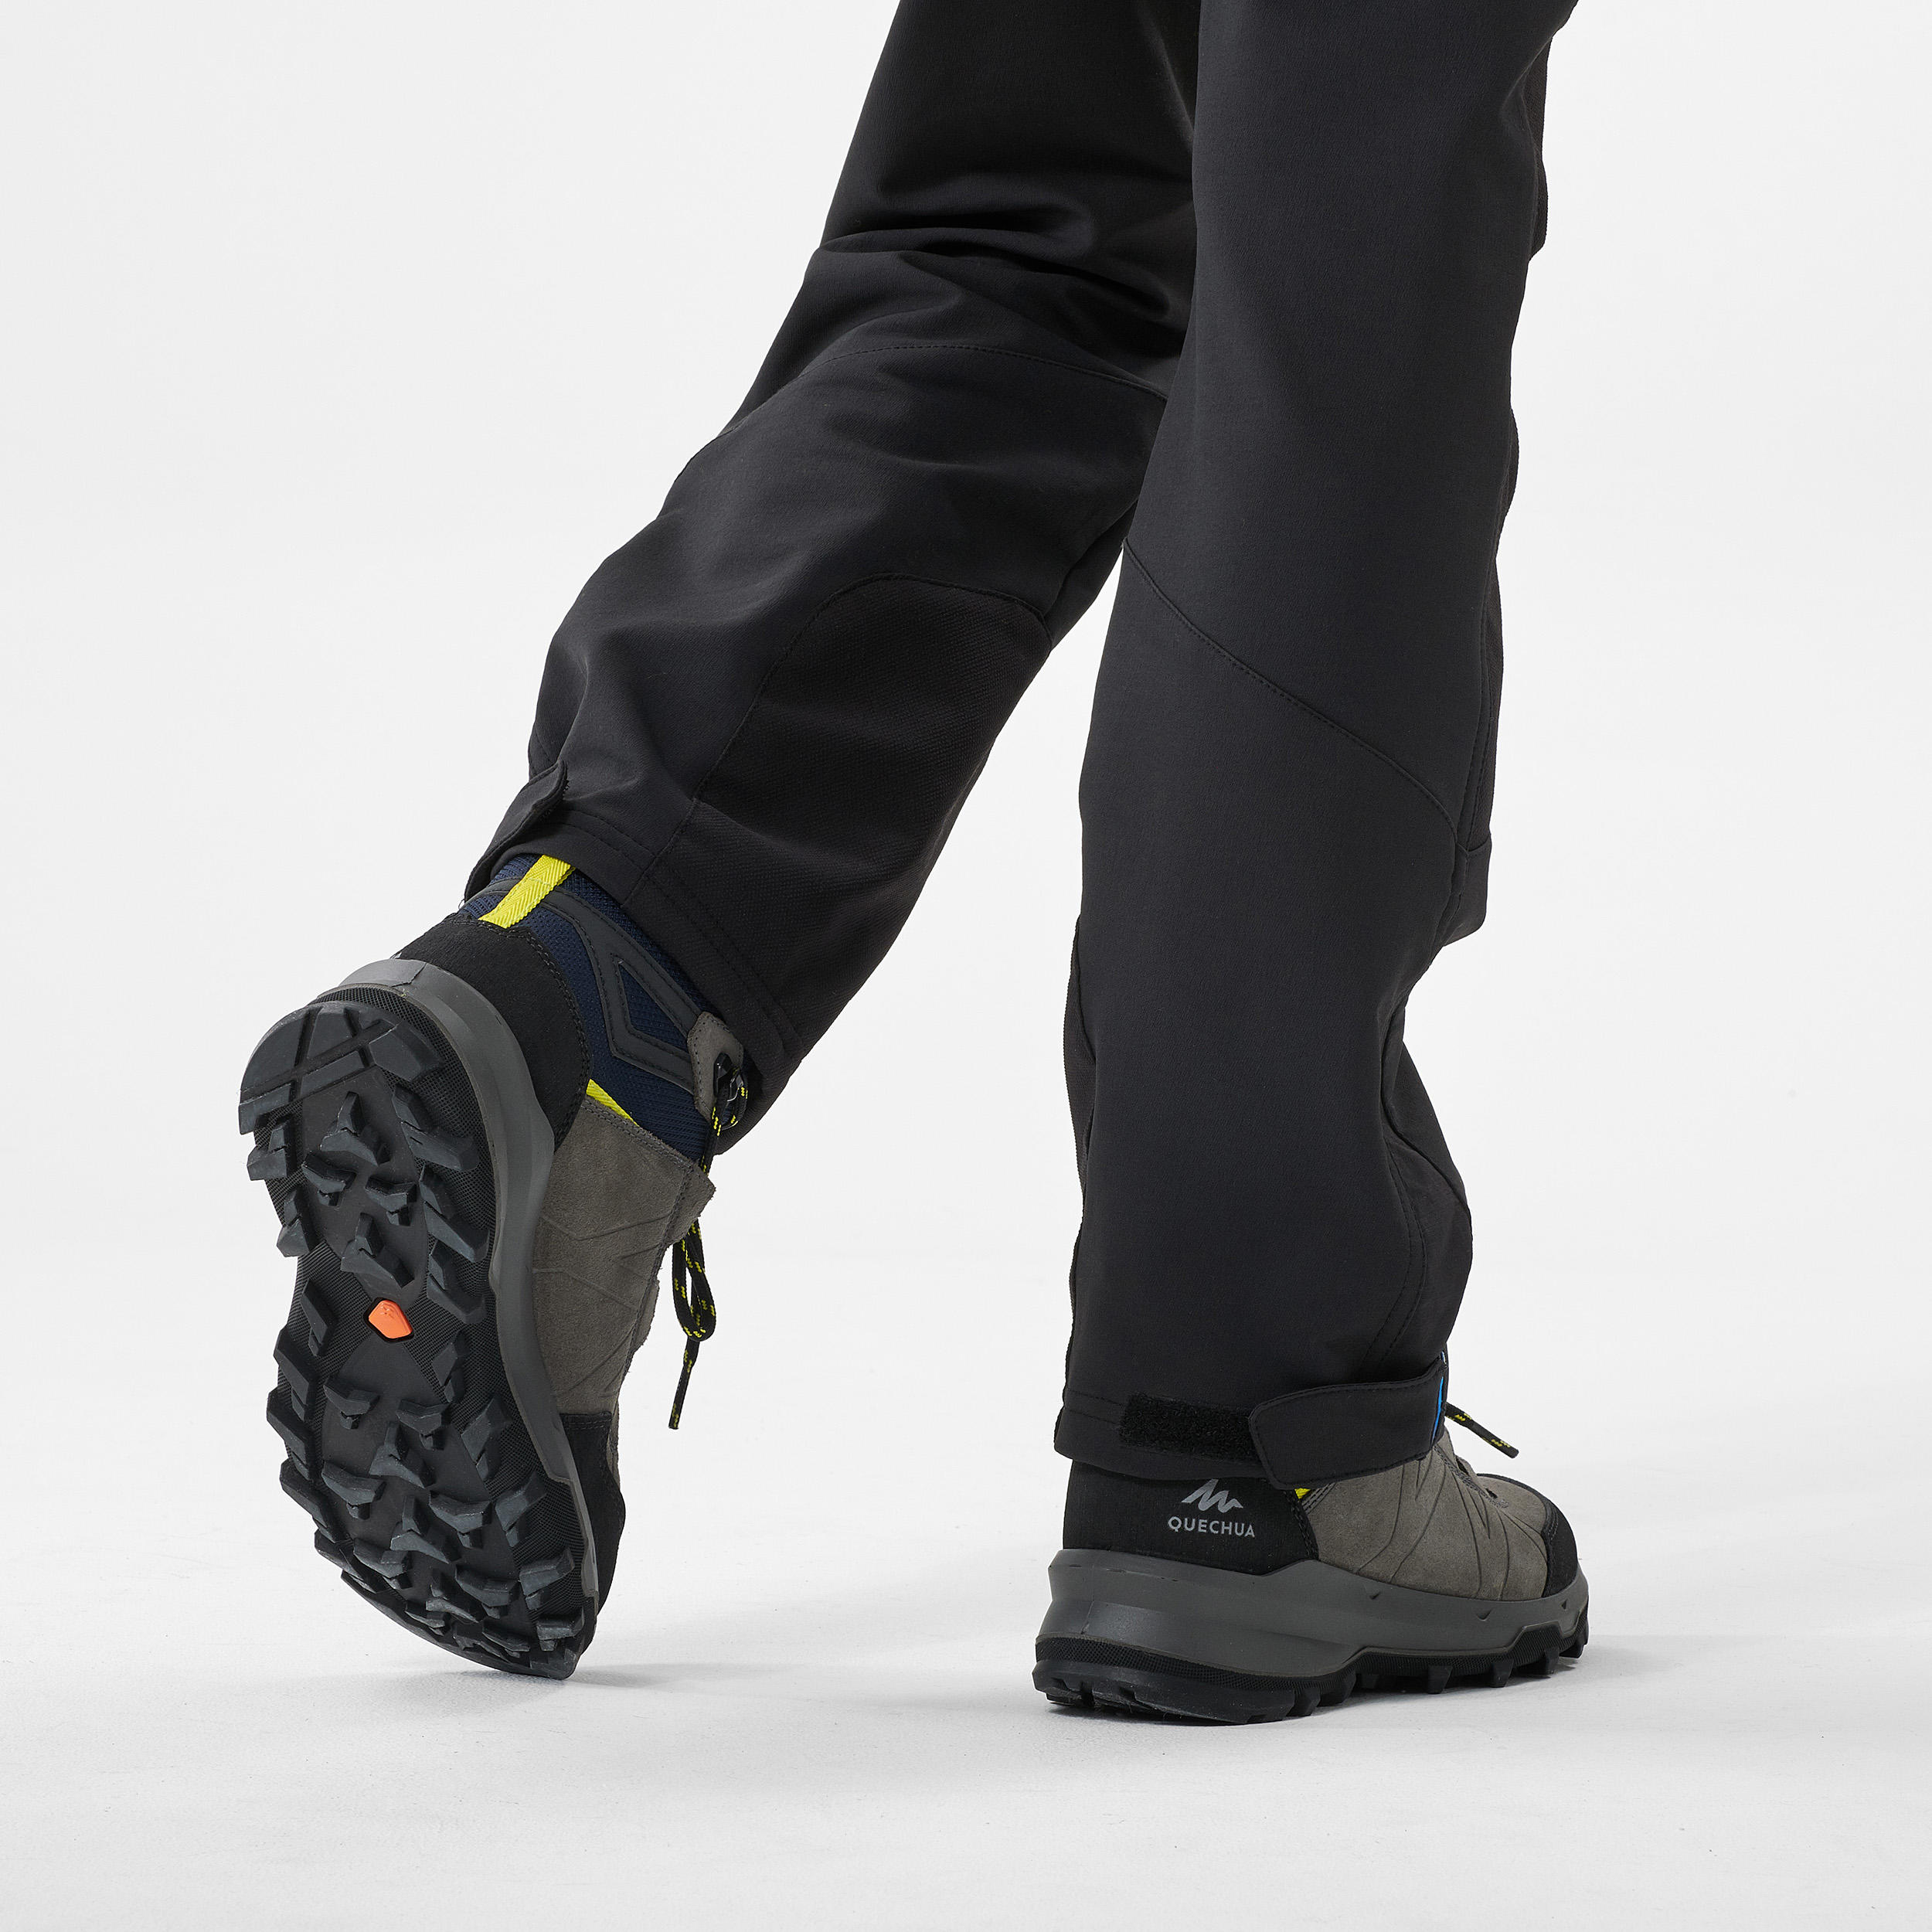 Kids’ Waterproof Mountain Walking Boots - MH500 Sizes 10-6 7/8